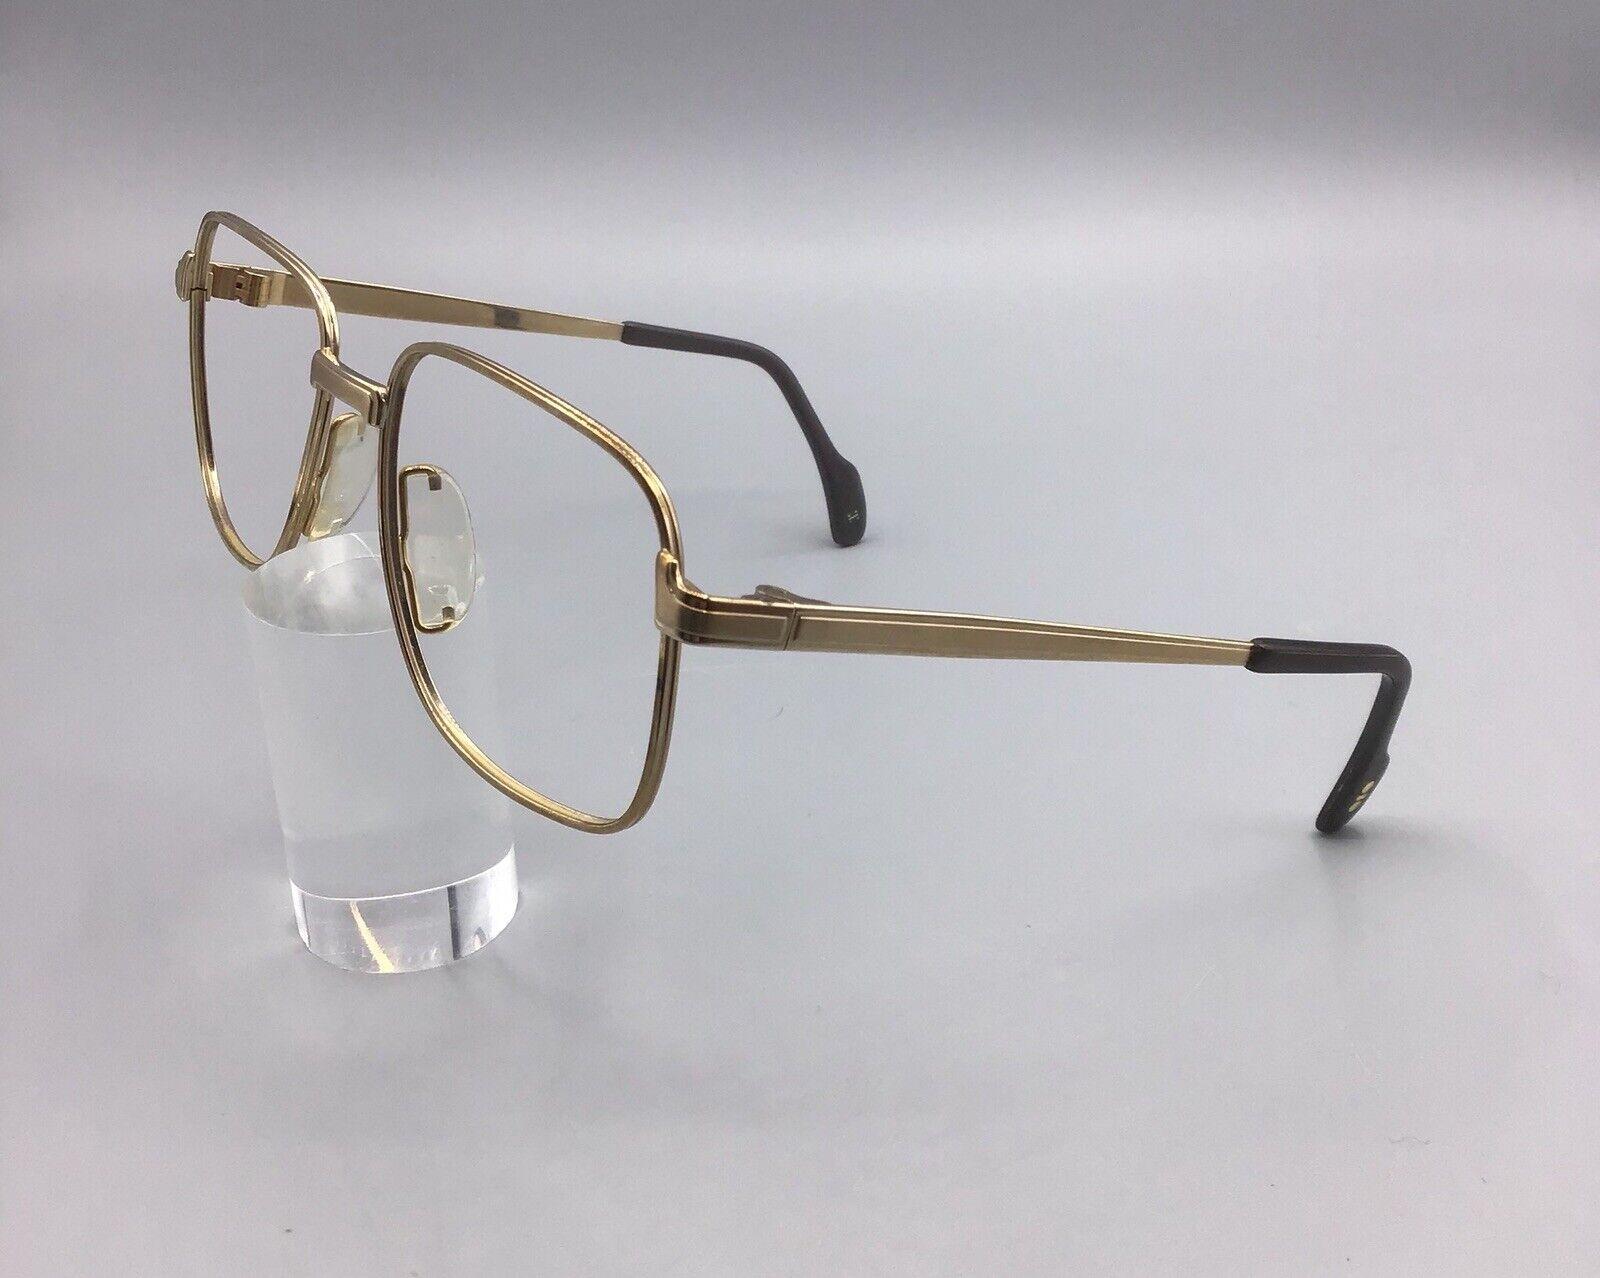 Metzler occhiale vintage Germany 0753 brillen lunettes BBK laminated gold